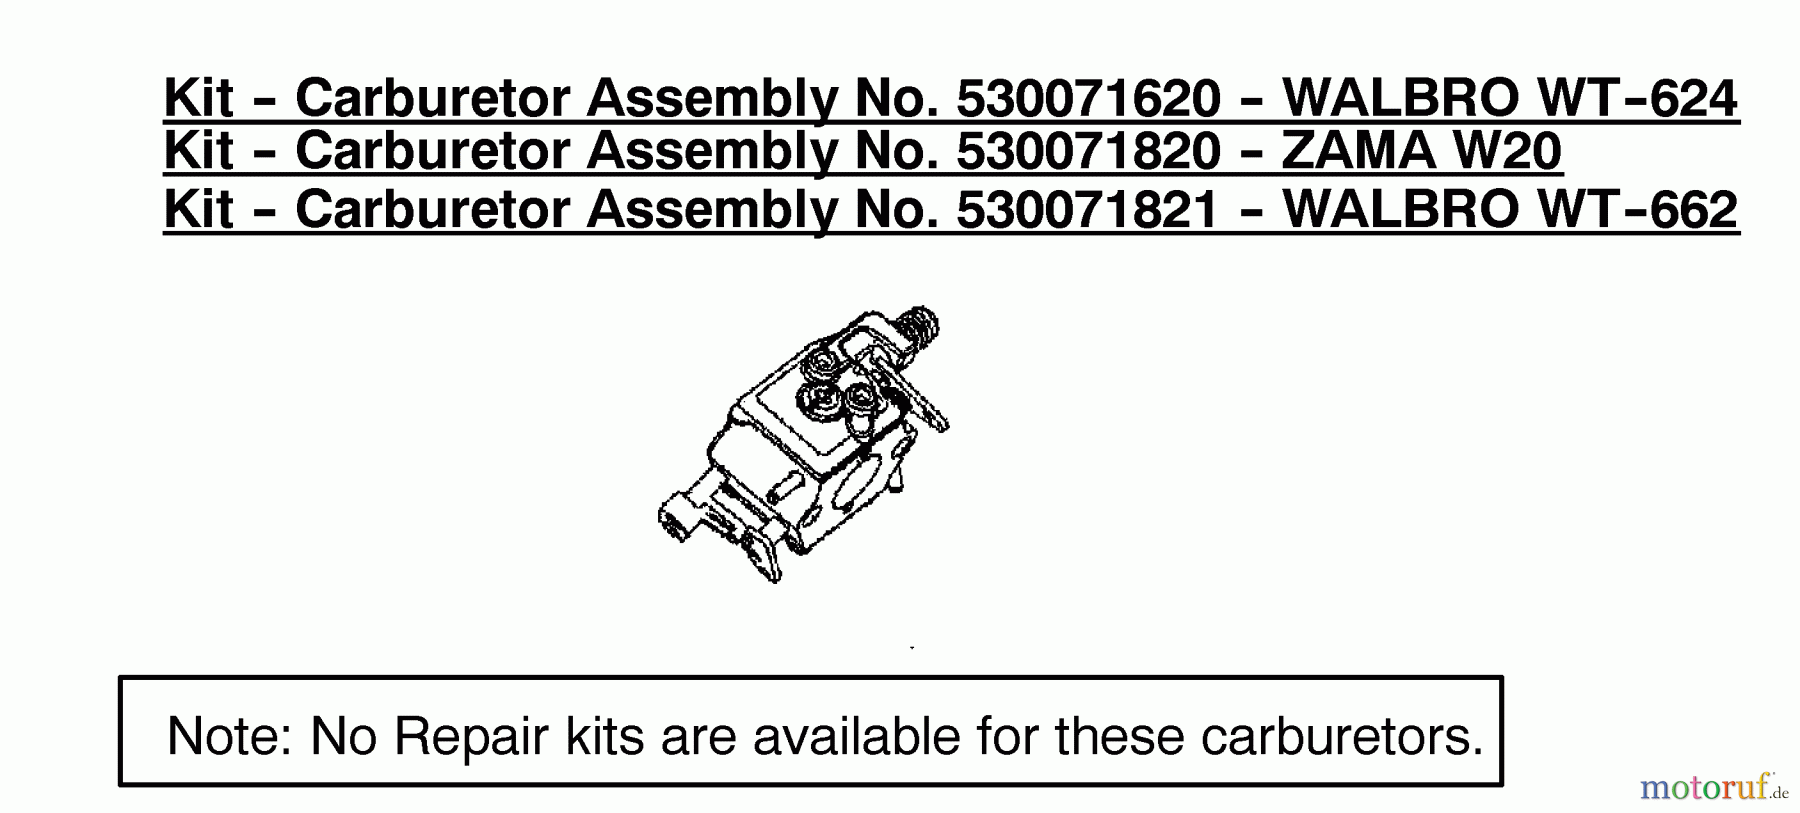  Poulan / Weed Eater Motorsägen 2055 (Type 7) - Poulan Woodsman Chainsaw Kit - Carburetor Assembly 530071820/530071821/530071620